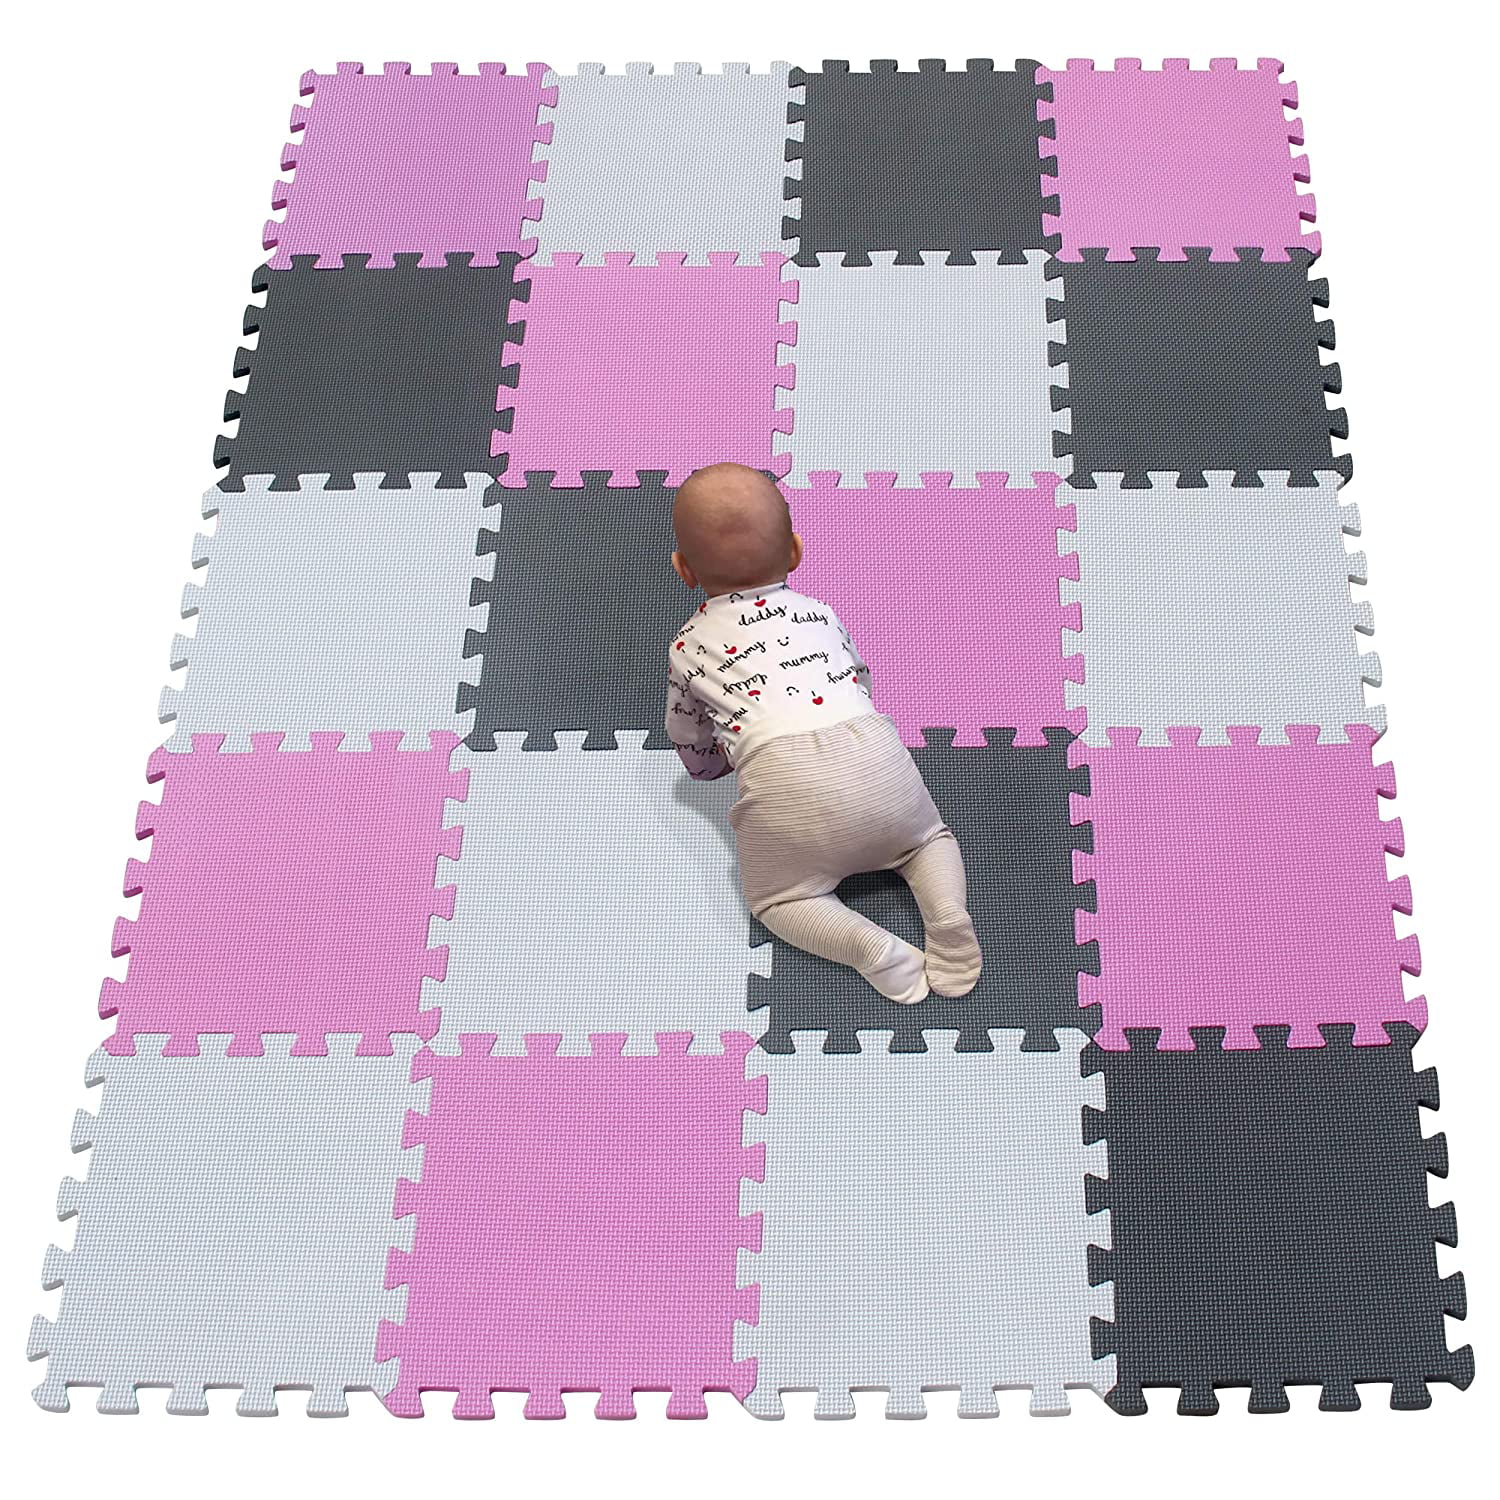 20Pcs Eva Foam Mat Soft Floor Tiles Interlocking Play Kids Baby Gym Mats 30X30cm